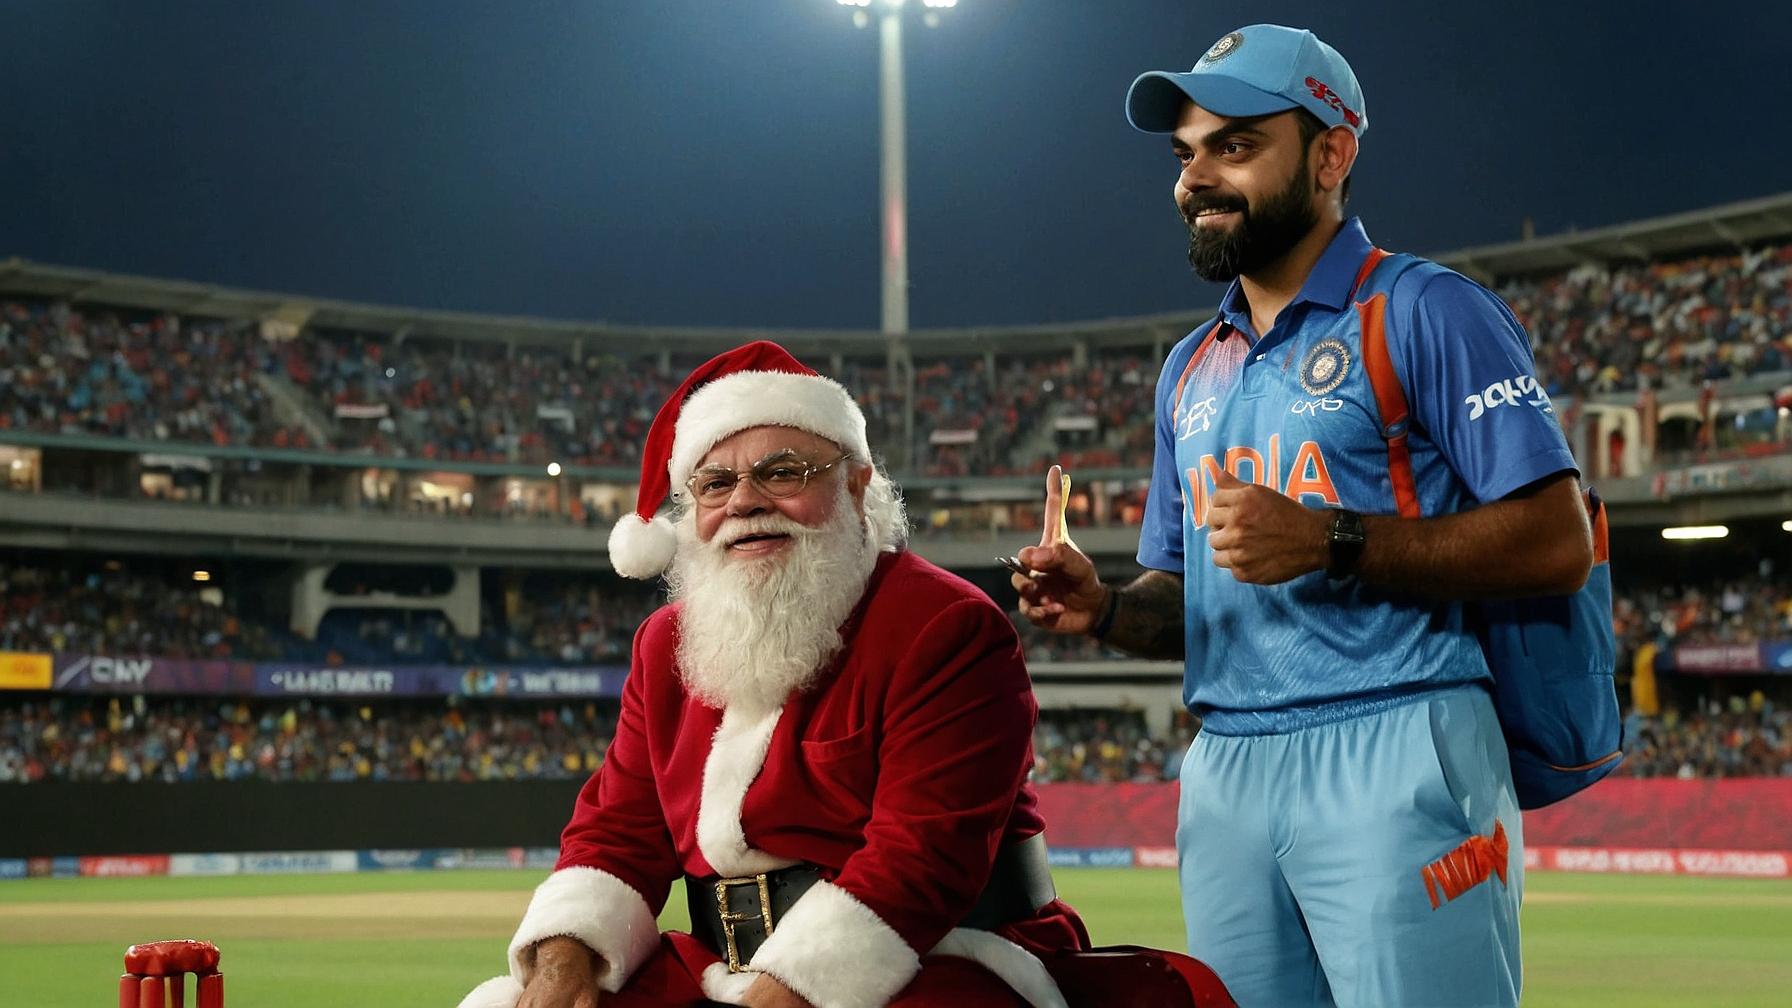 Santa Claus with Virat Kohli